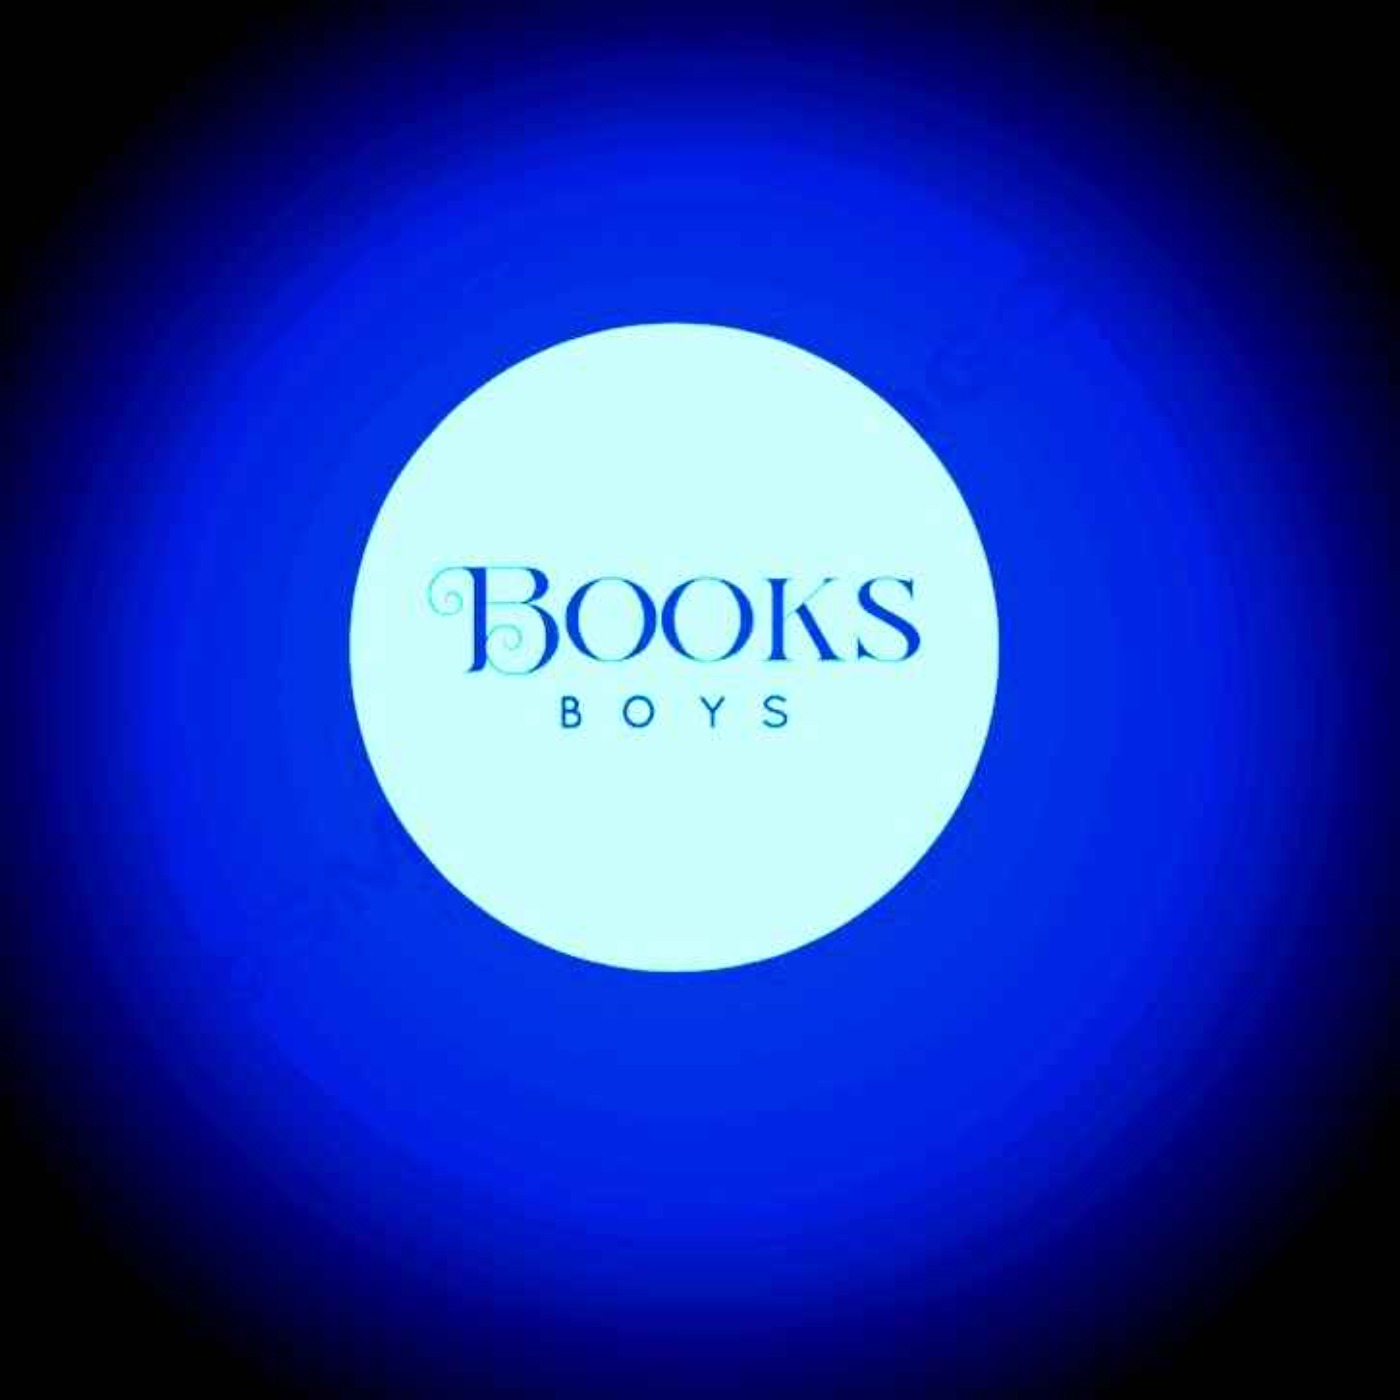 Books Boys Bonus: Philip Davidson